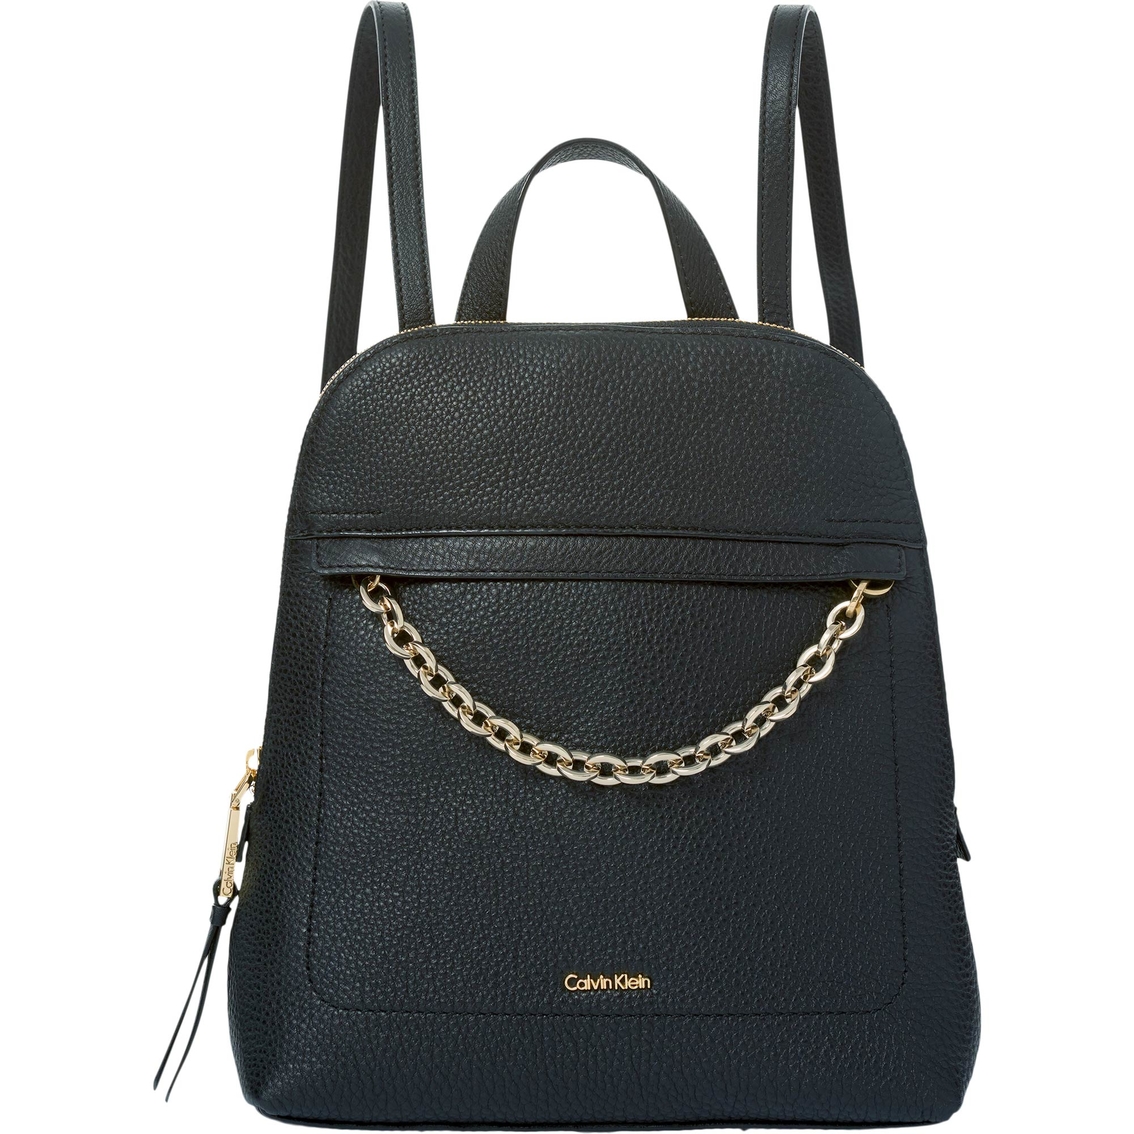 Calvin Klein Pebble Leather Backpack | Backpacks | Clothing ...